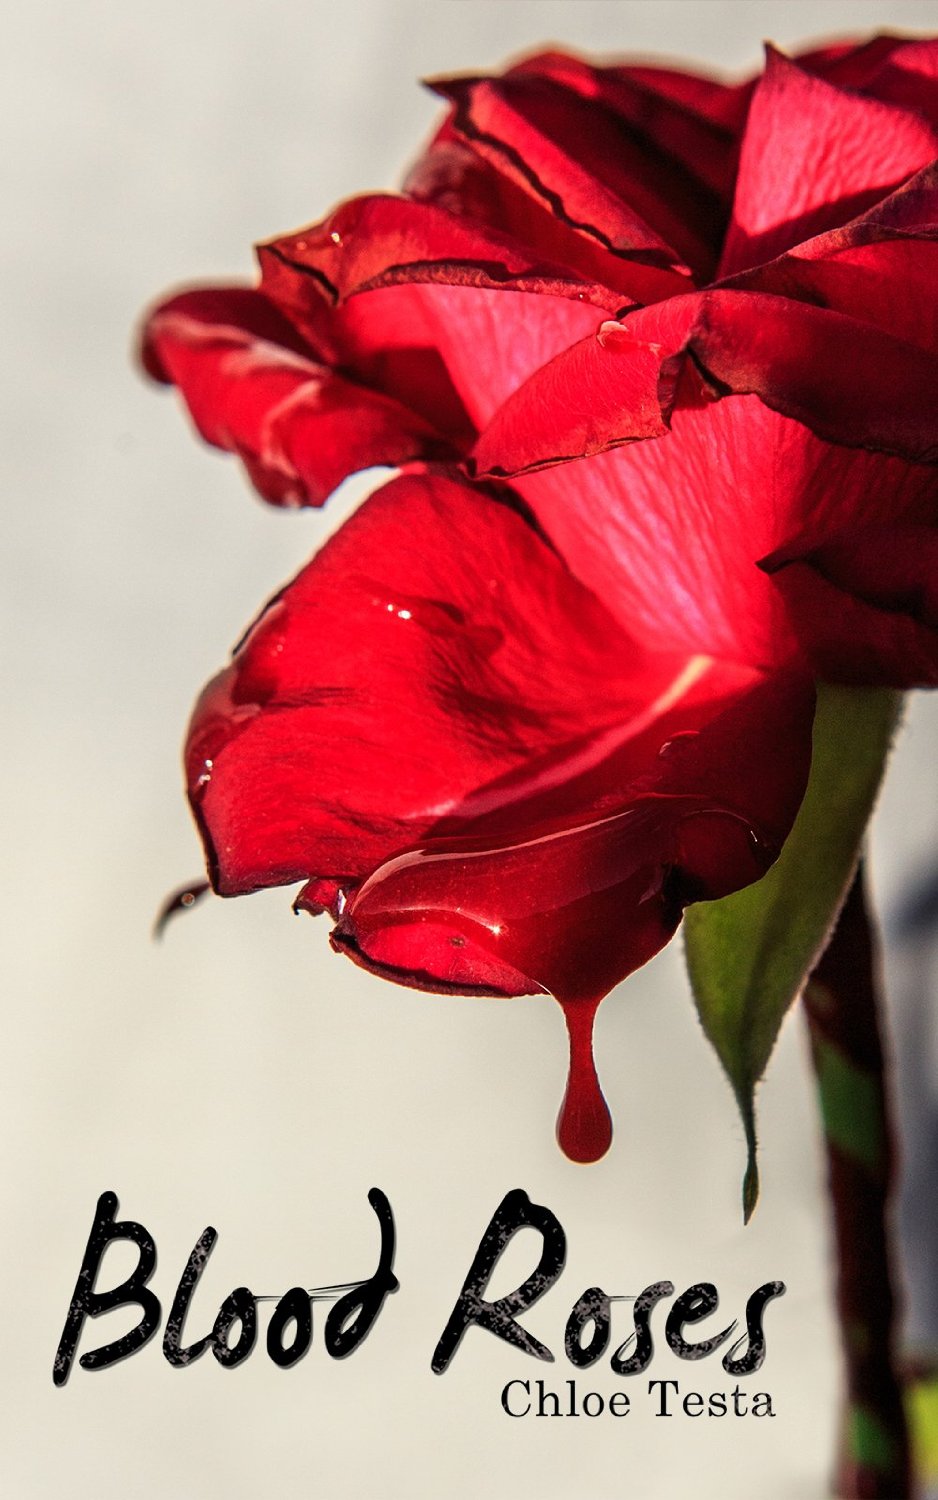 Blood Roses by Chloe Testa